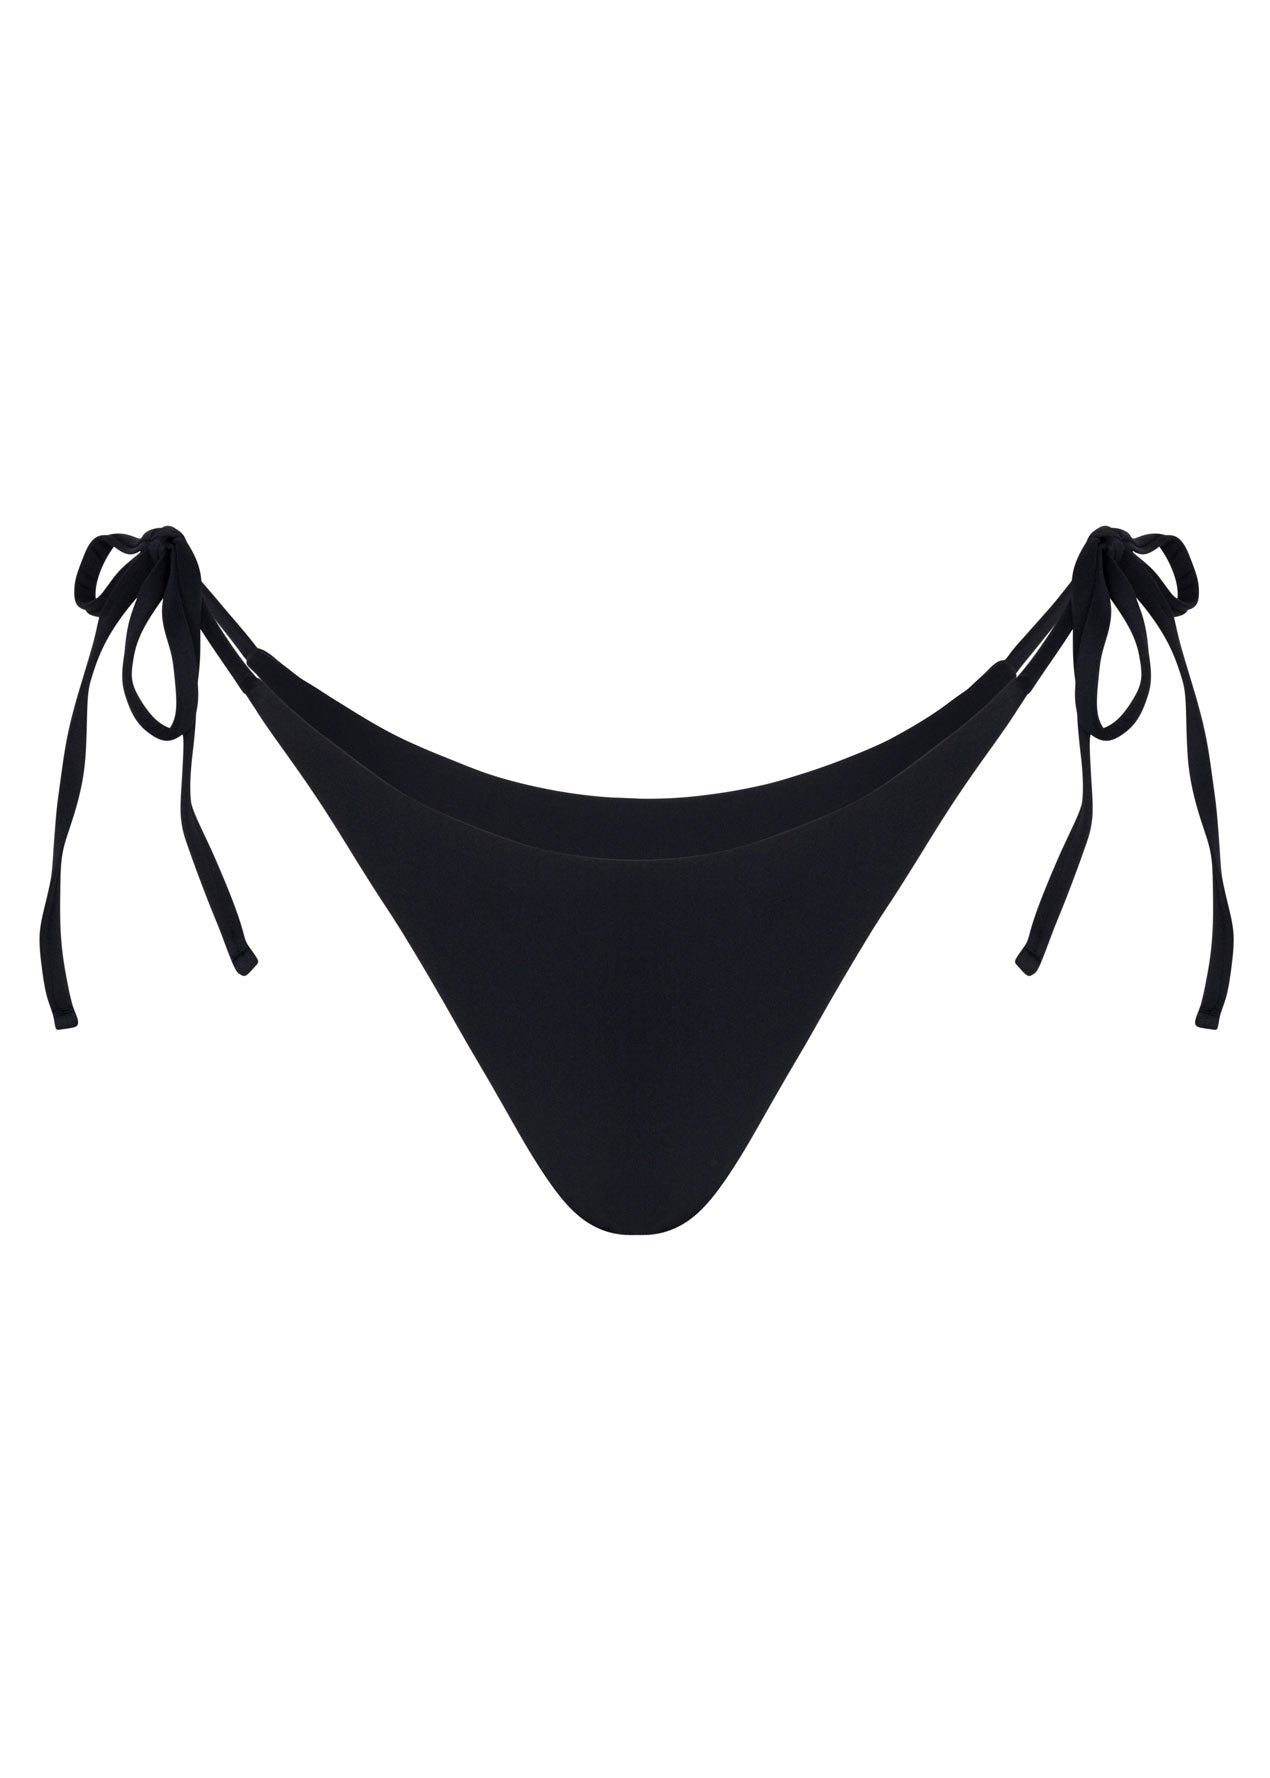 Butterfly Bottom - Black - Sands Swim - Best Black Bikini XL